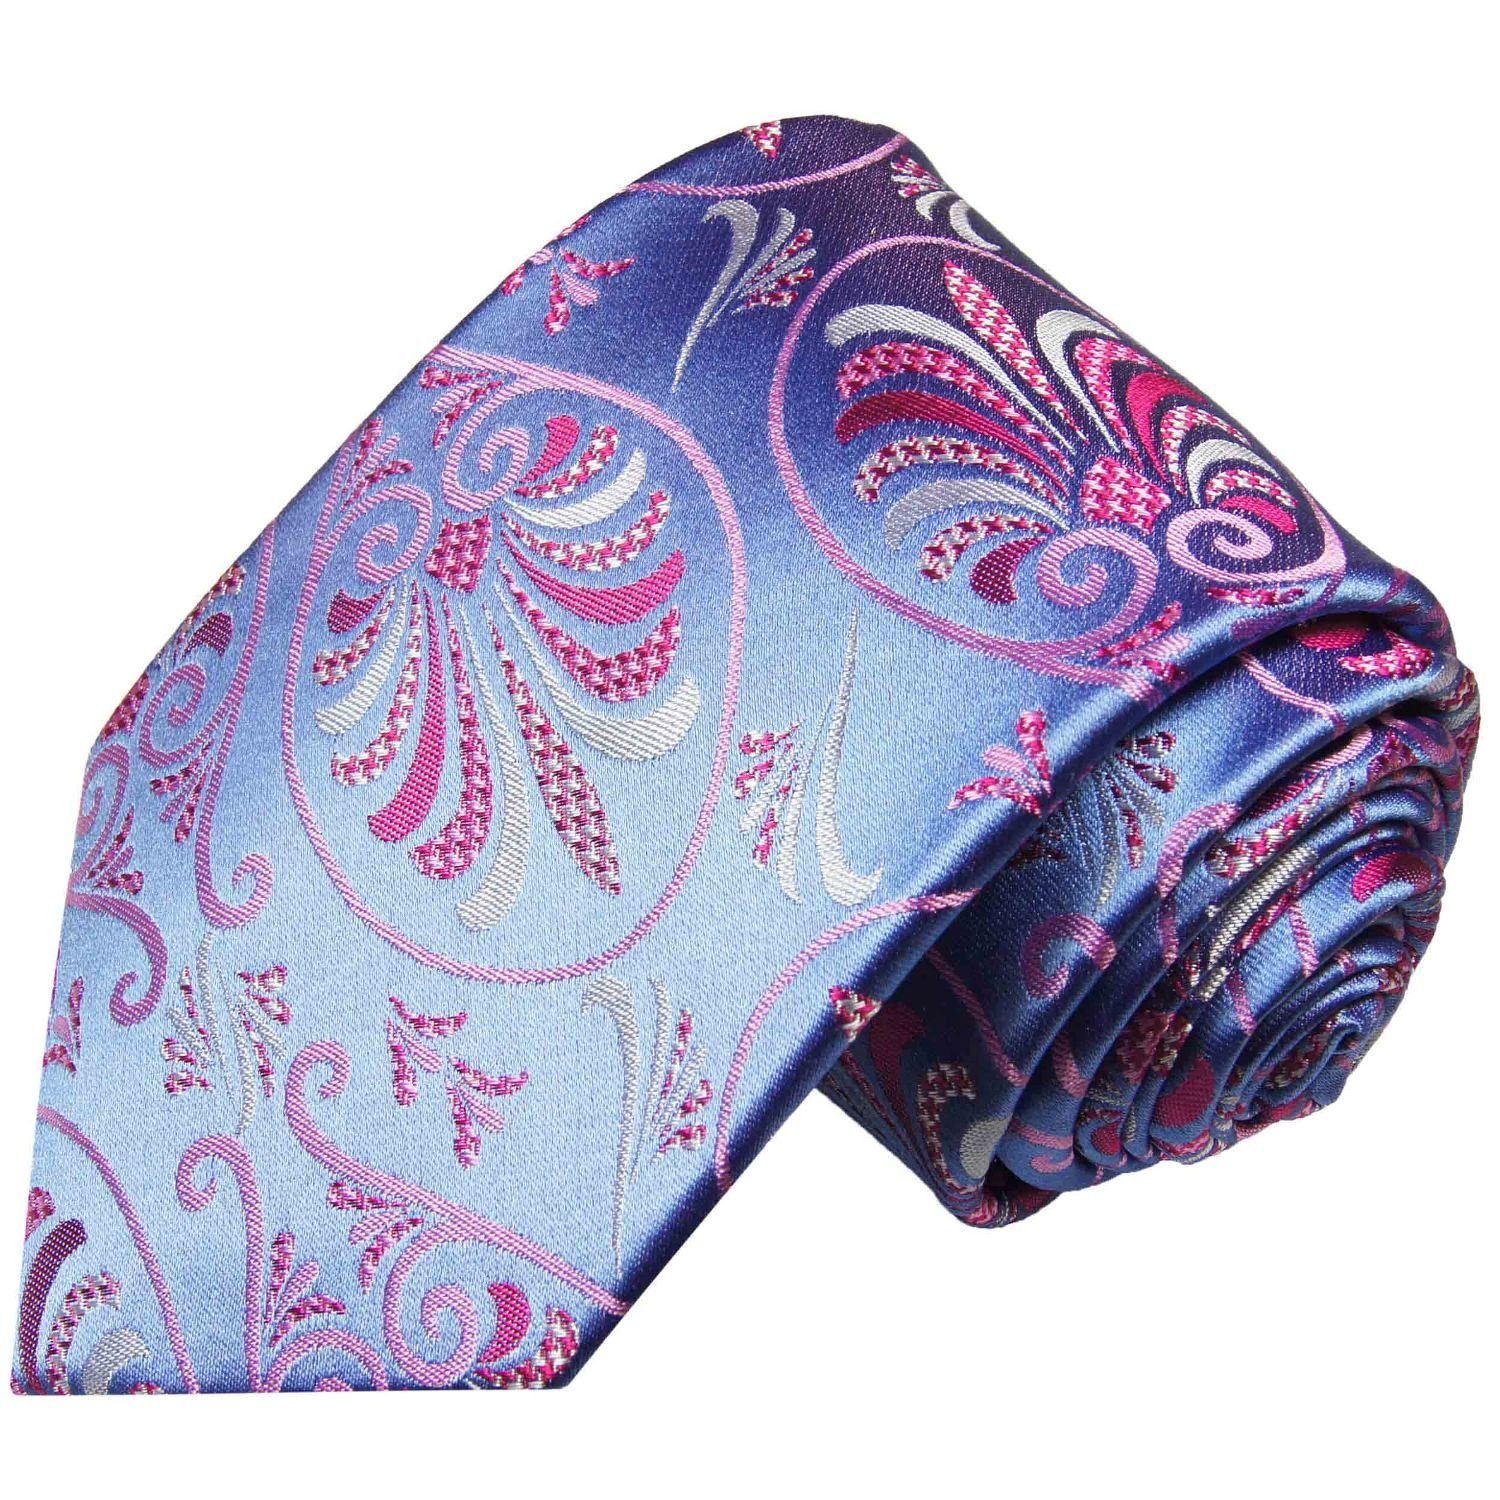 Paul Malone Krawatte Elegante Seidenkrawatte Herren Schlips modern floral 100% Seide Schmal (6cm), blau pink 1011